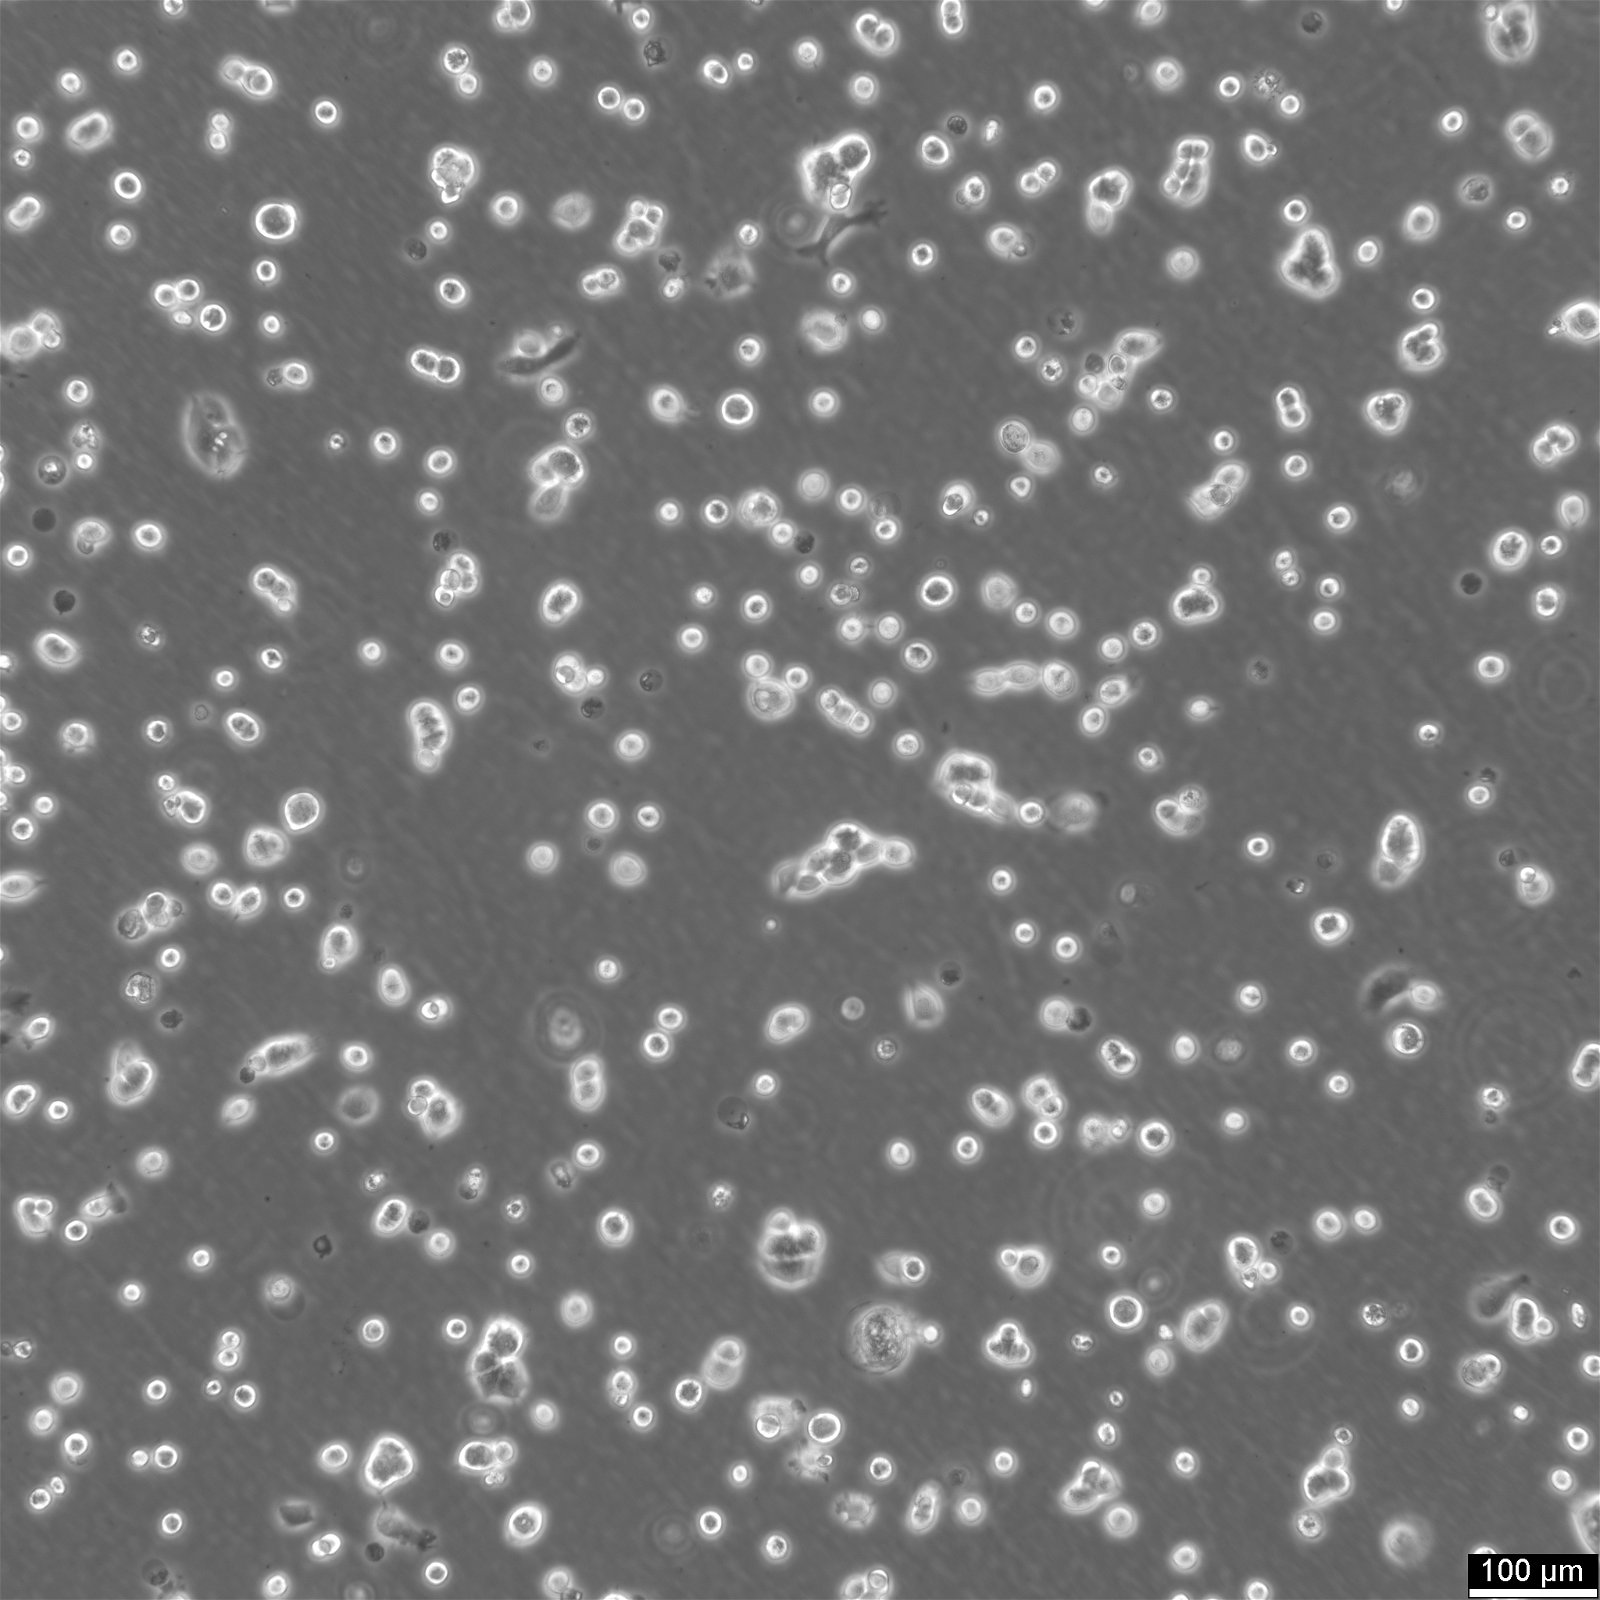 NCI-H358 Cells